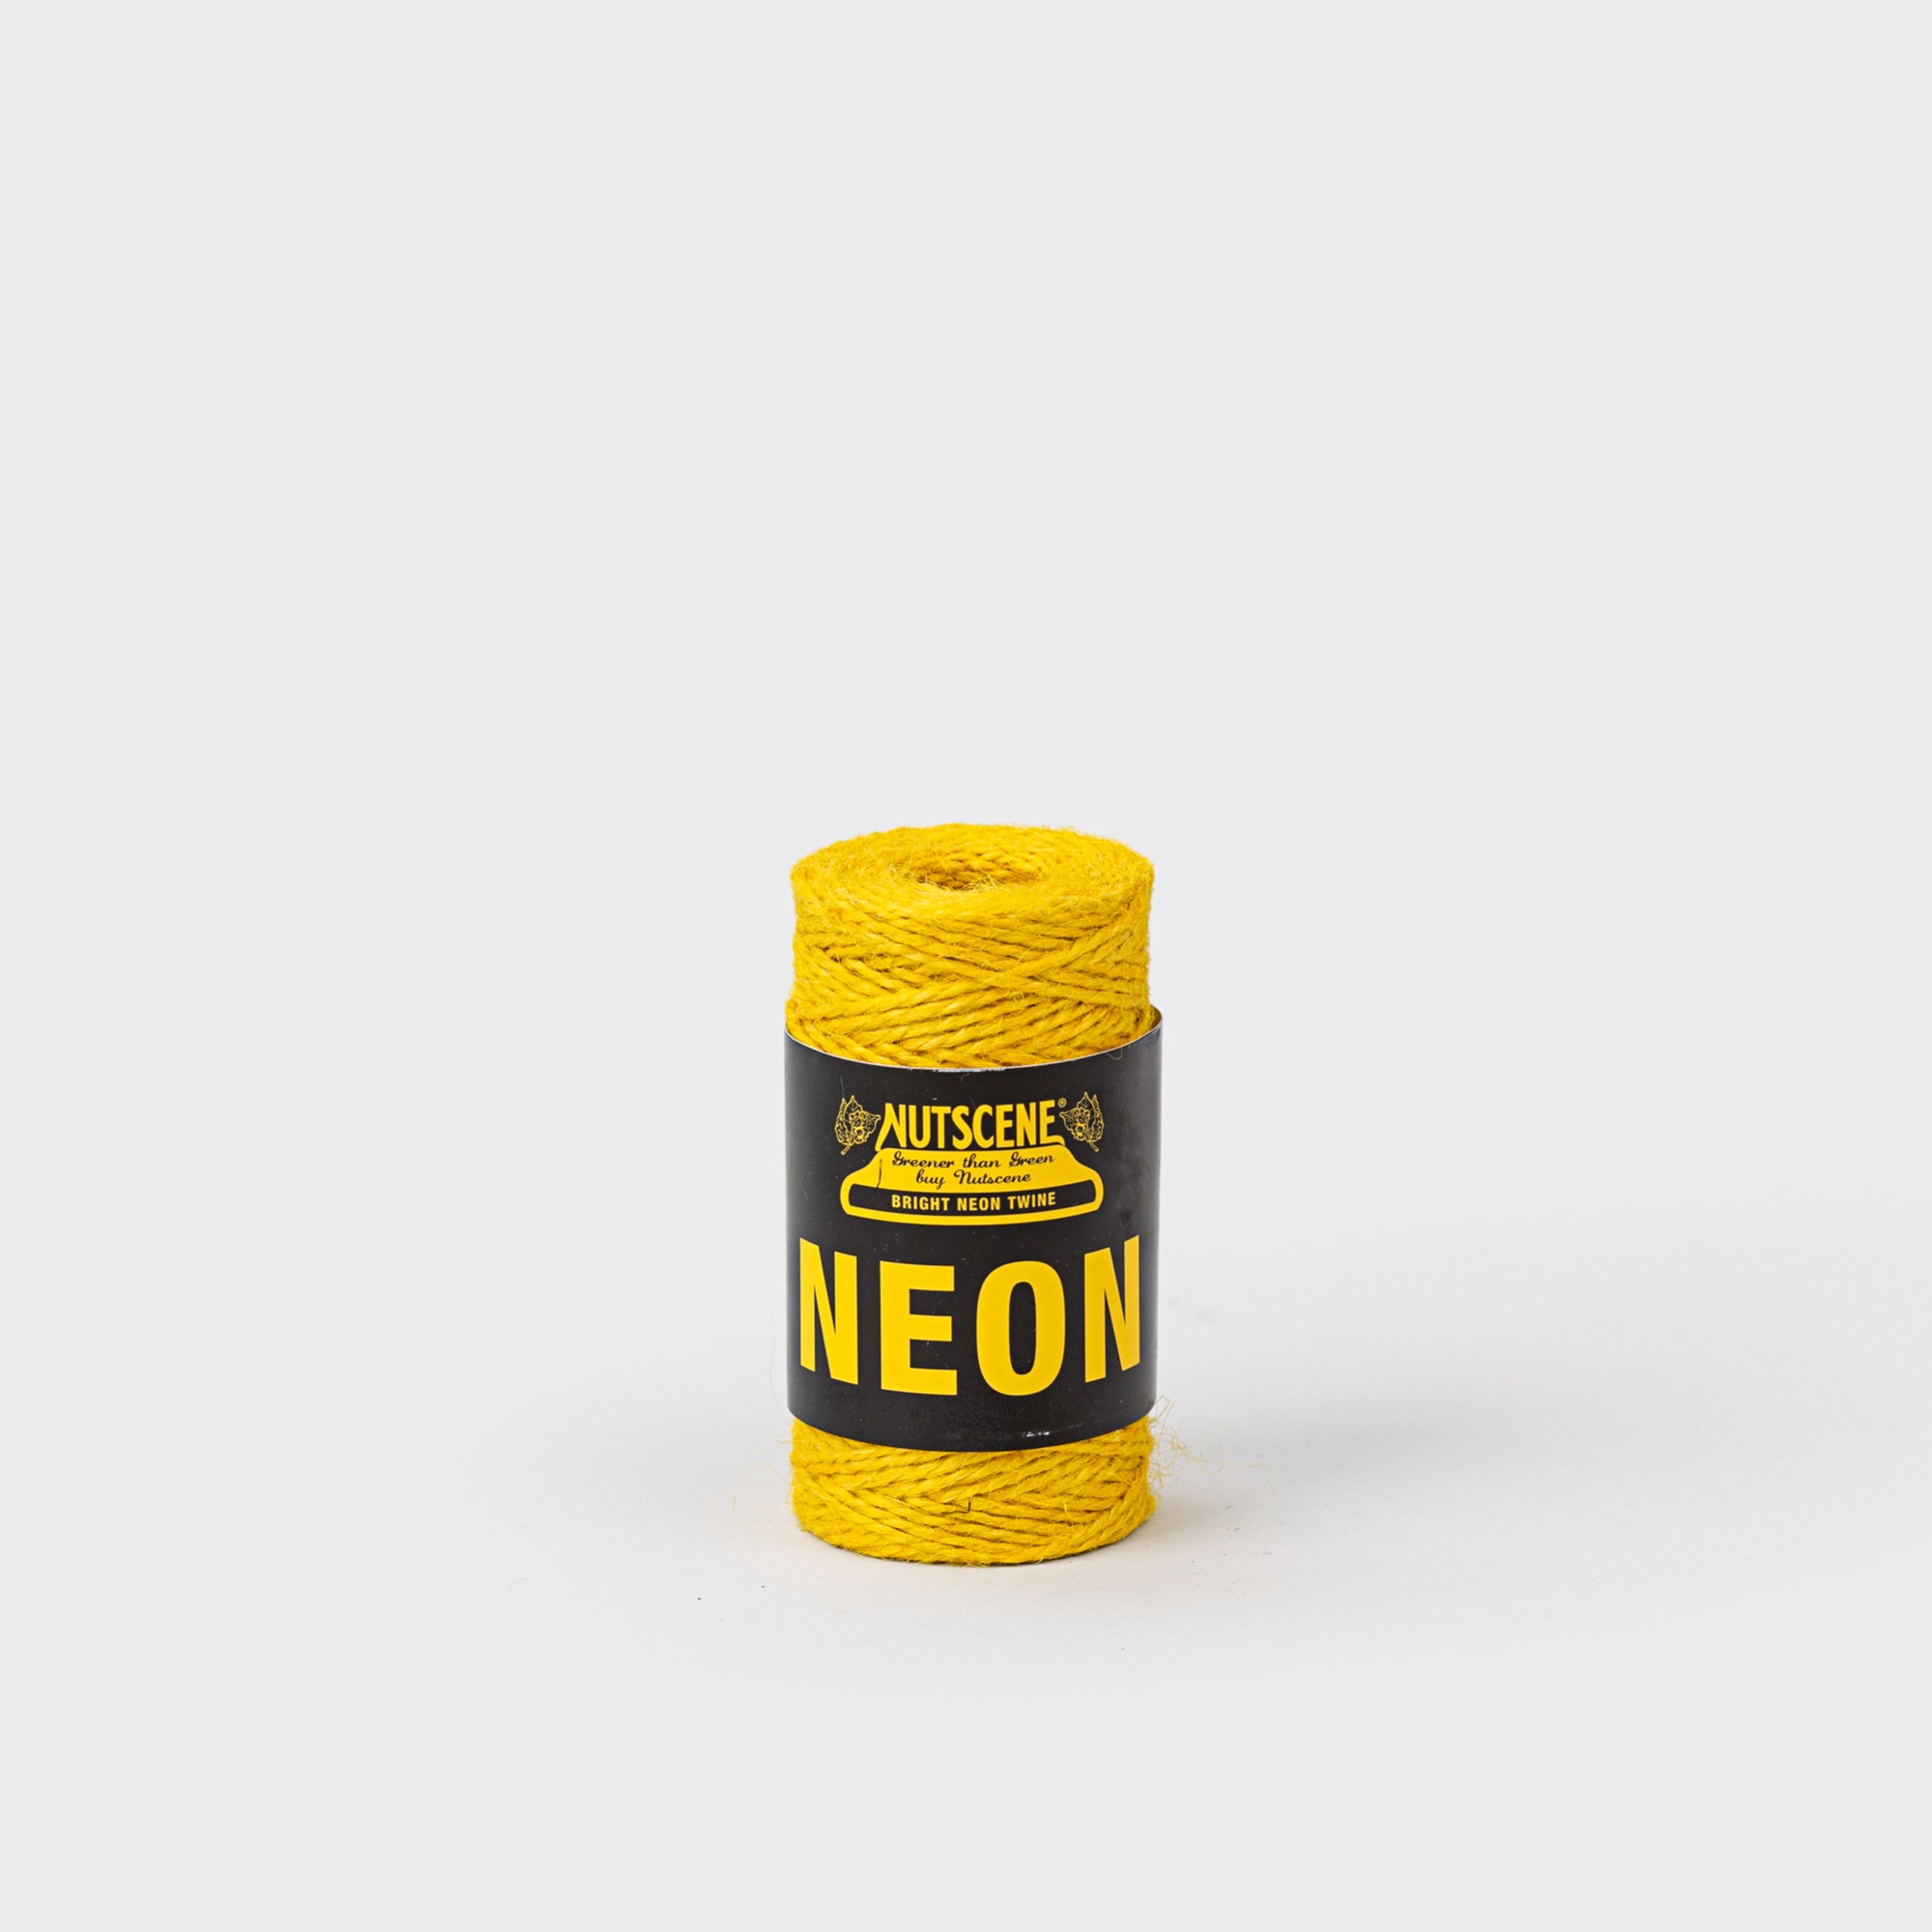 Nutscene Neon Spools 90M - Yellow